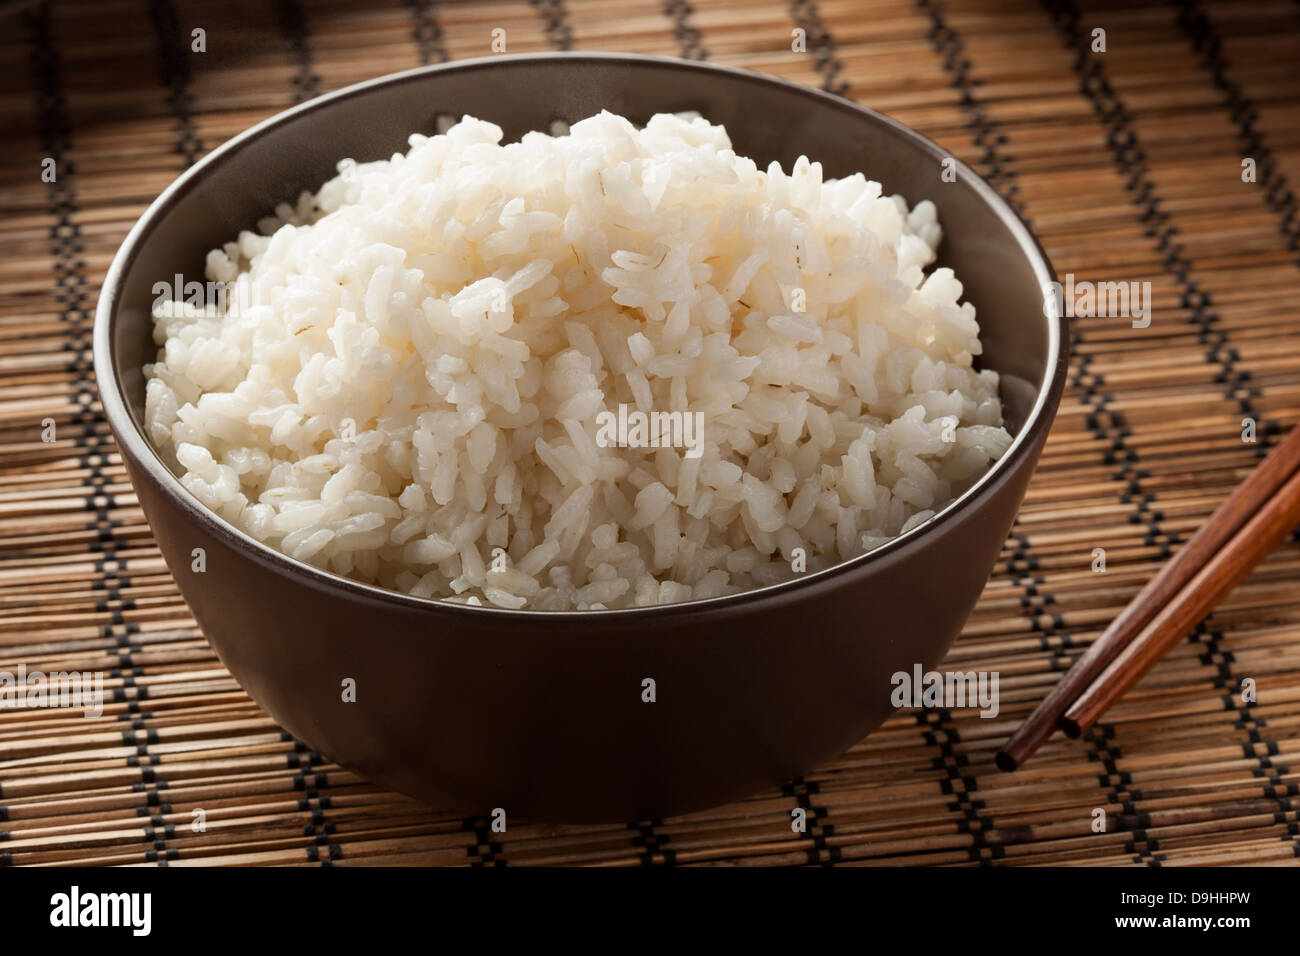 Bowl of Organic White Rice with chop sticks Stock Photo